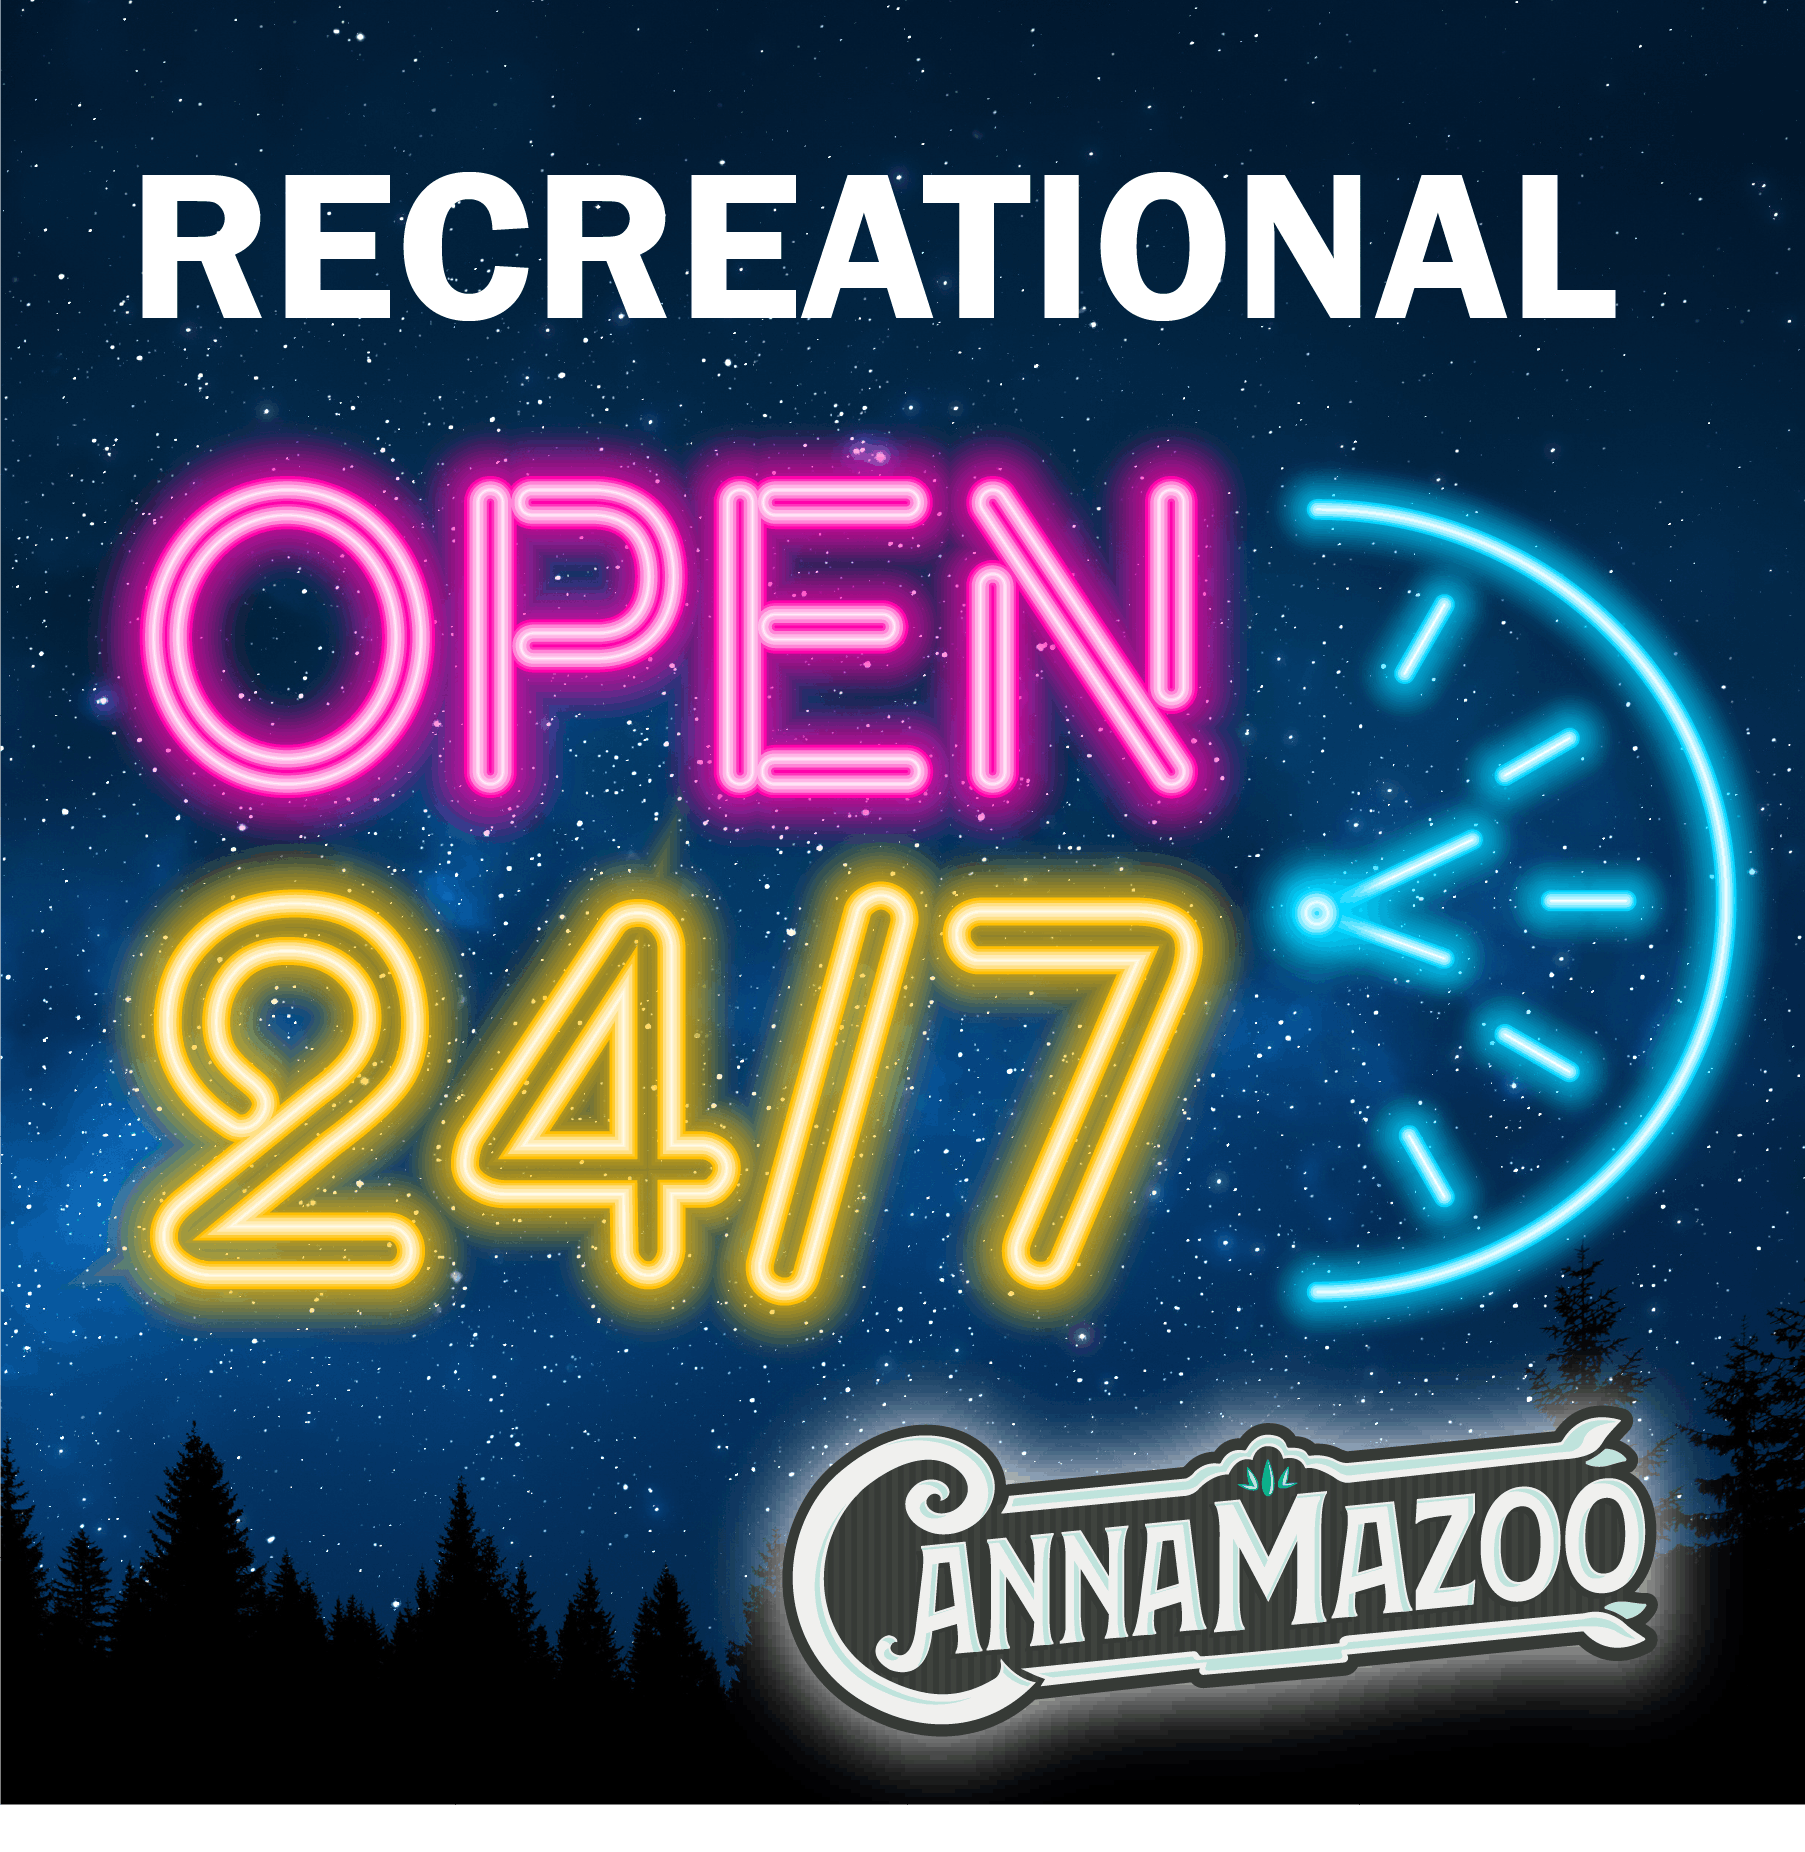 Cannamazoo 24hr Recreational Weed Dispensary-logo